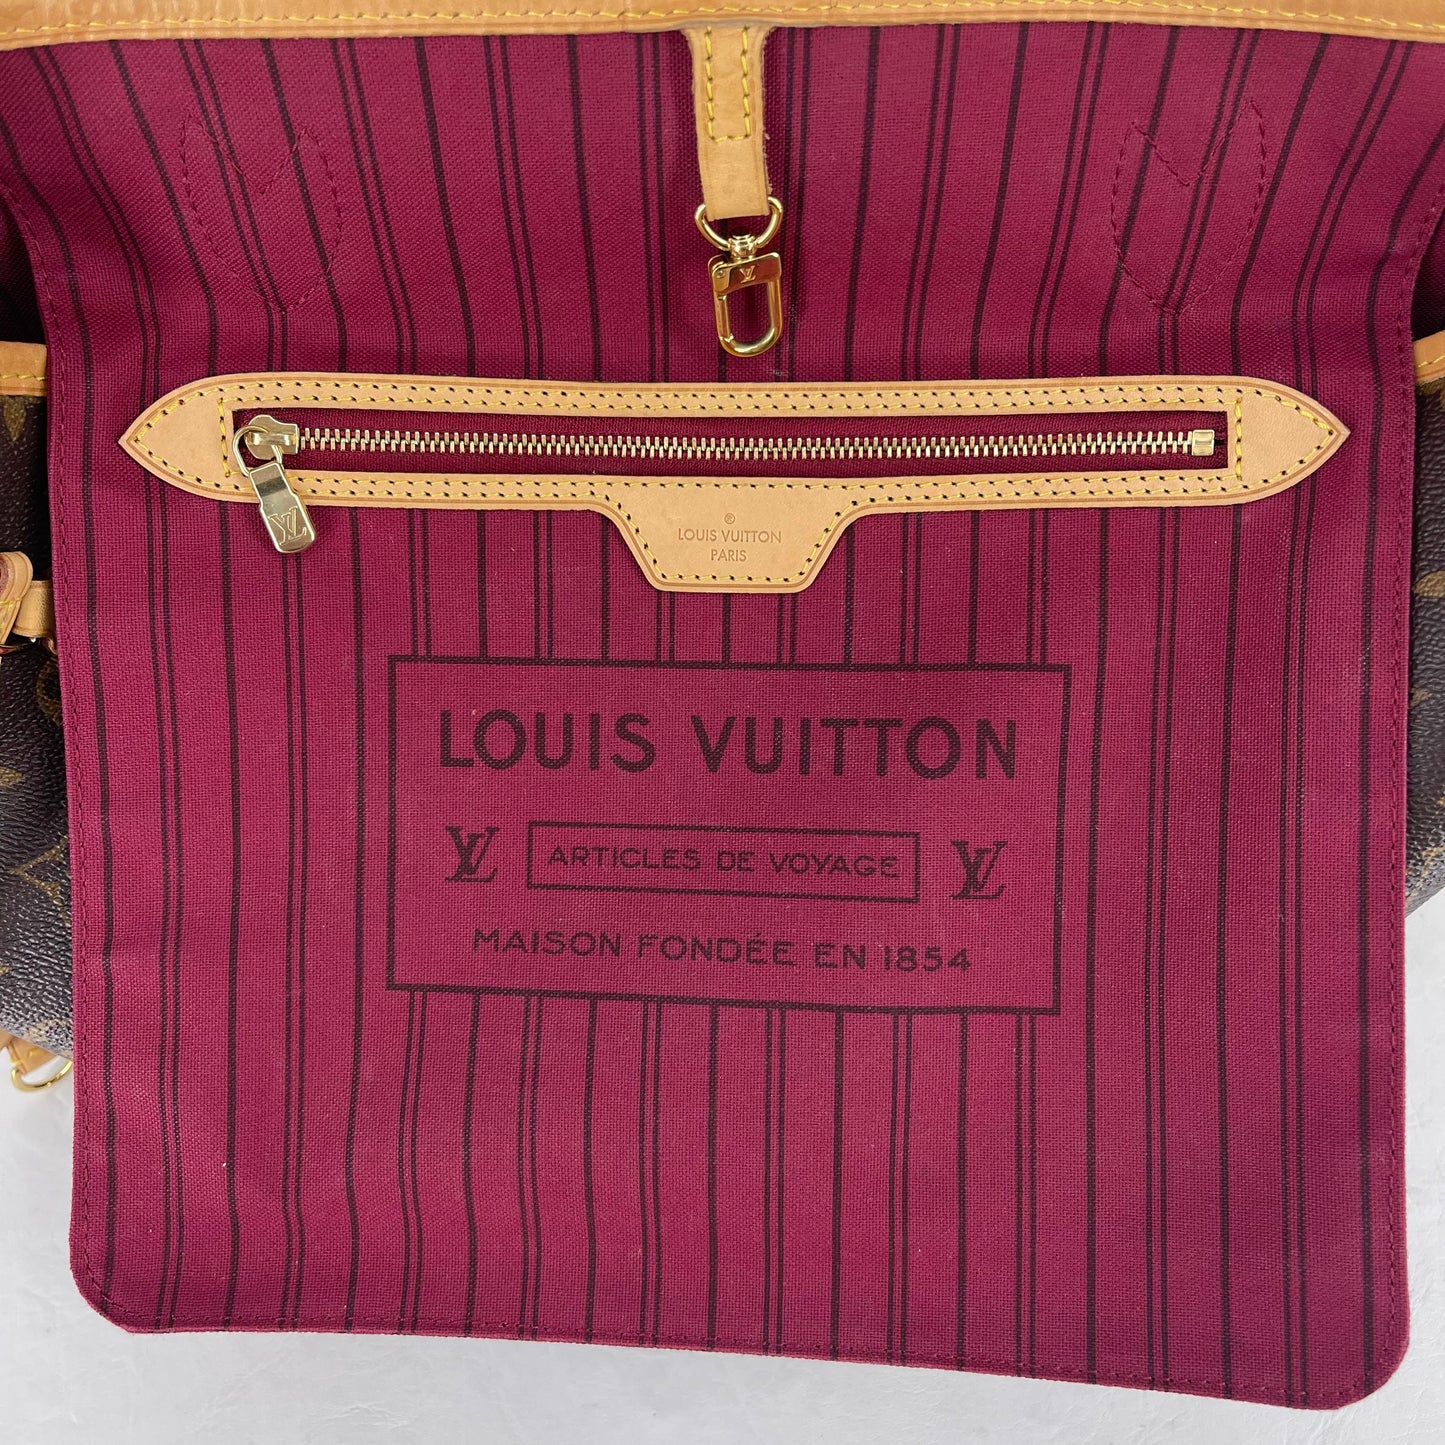 Authentic Louis Vuitton Neverfull MM Pivone